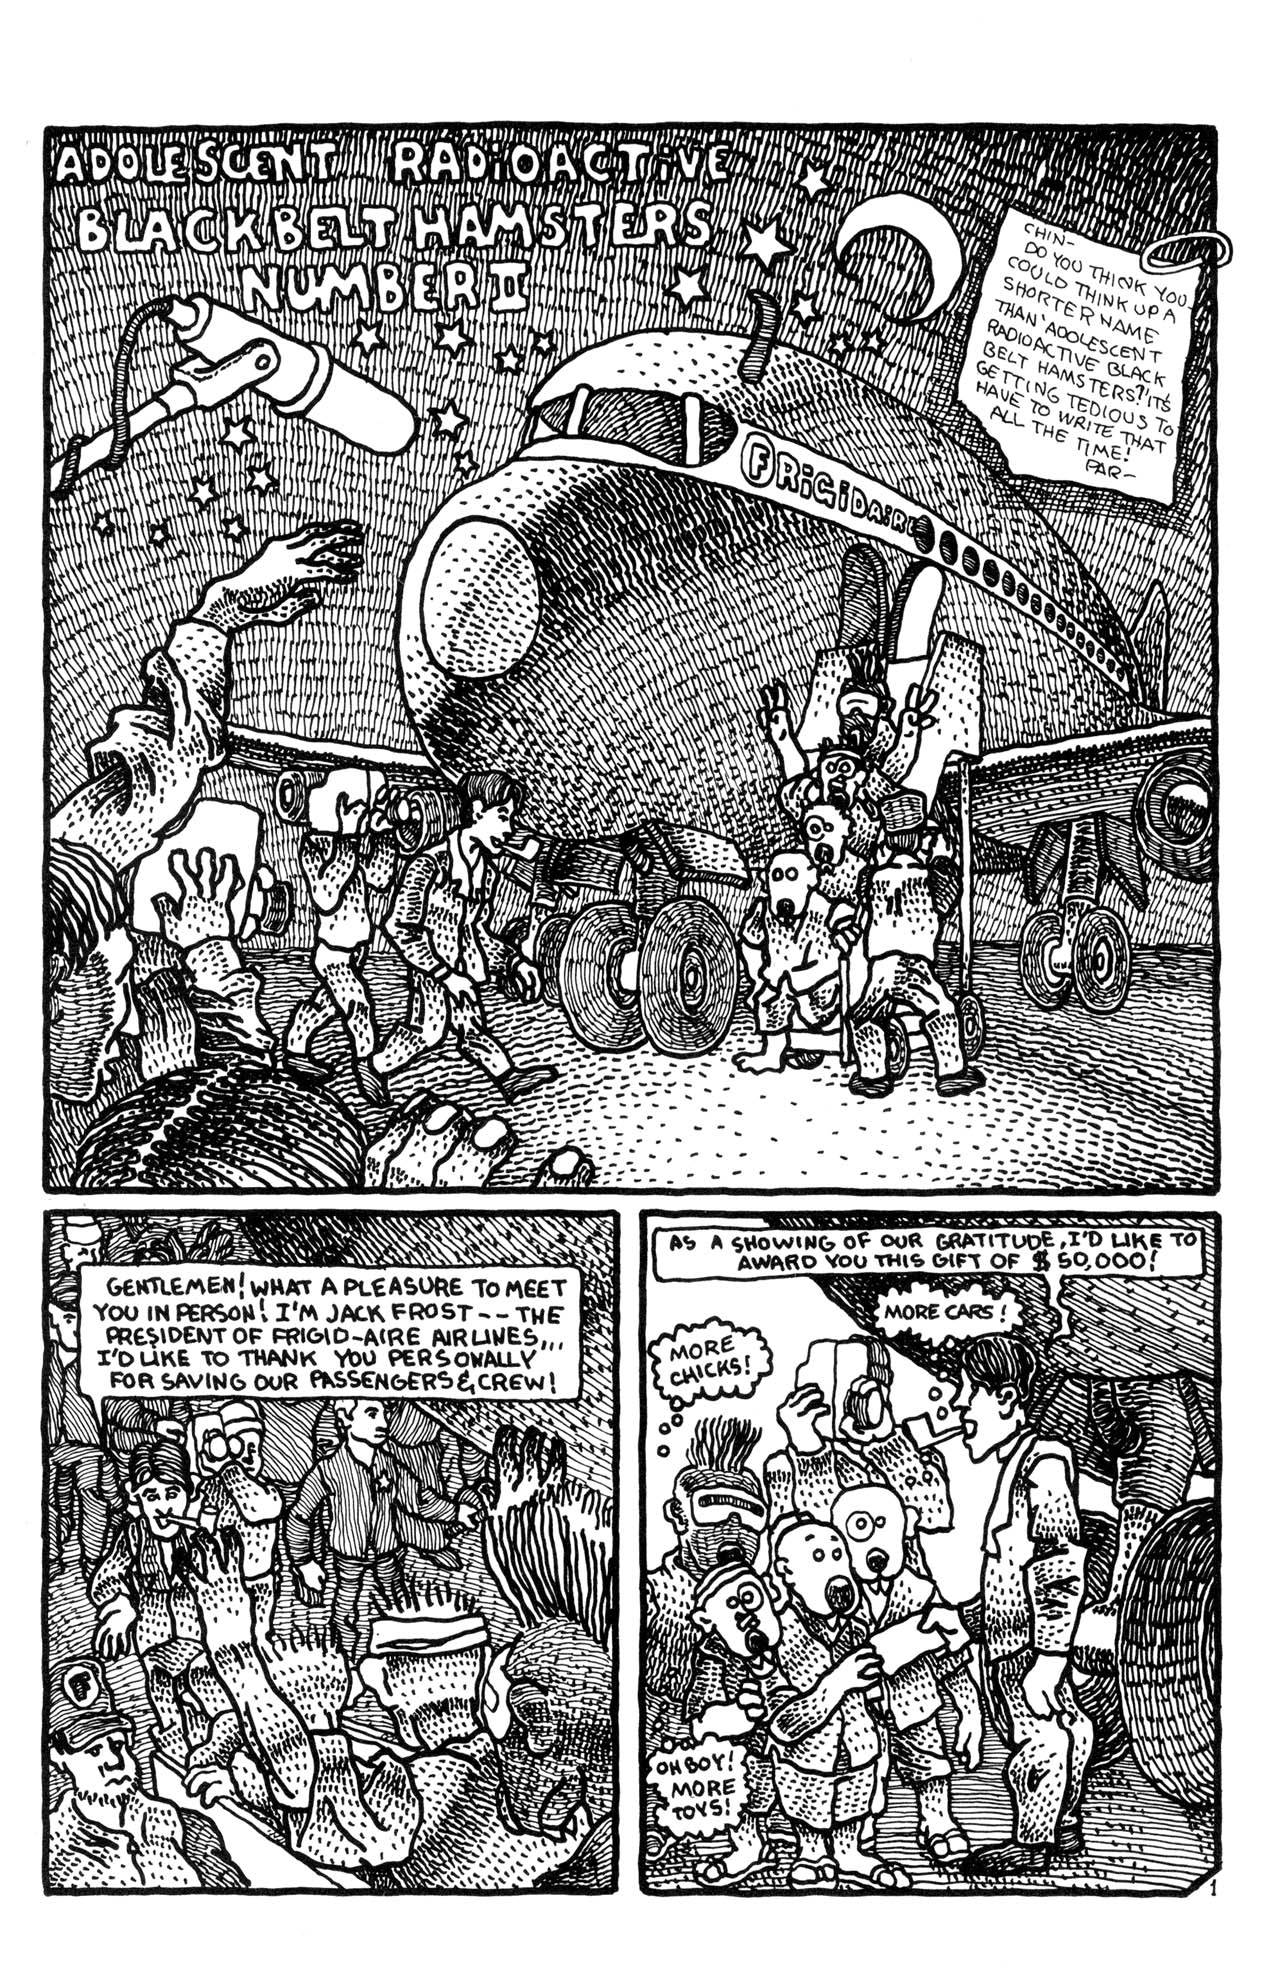 Read online Adolescent Radioactive Black Belt Hamsters comic -  Issue #2 - 3